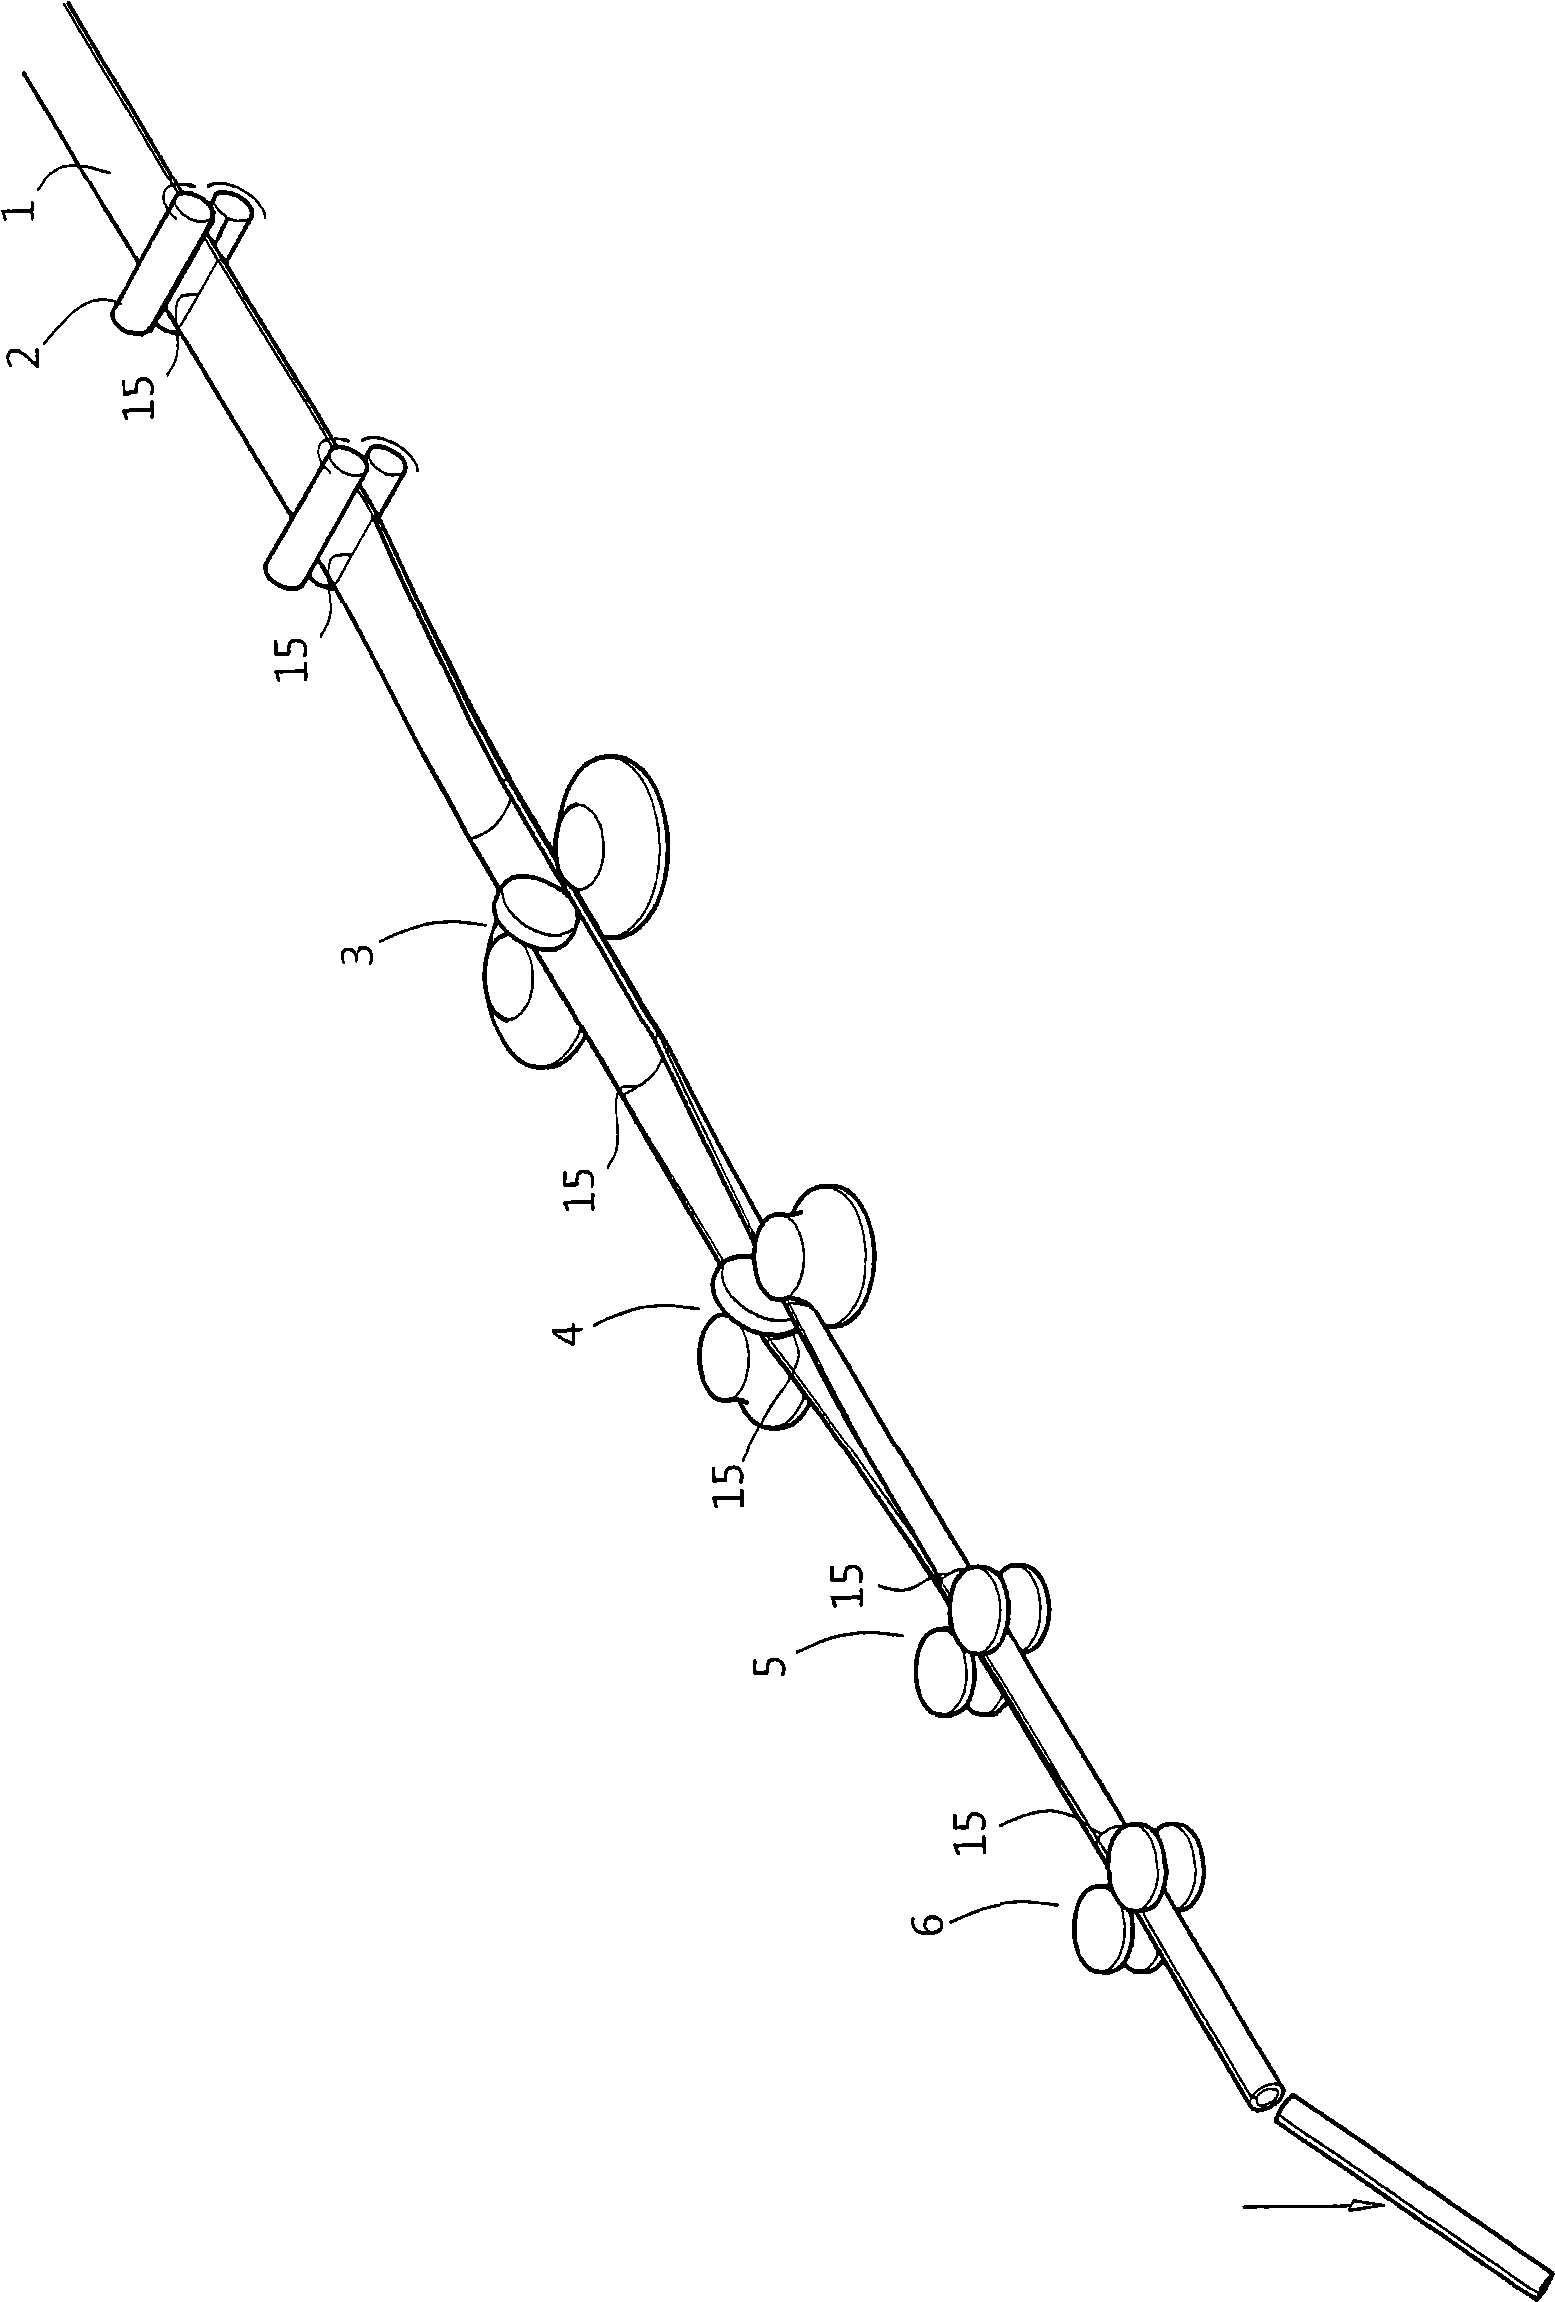 Production method of shoe heel steel pipe